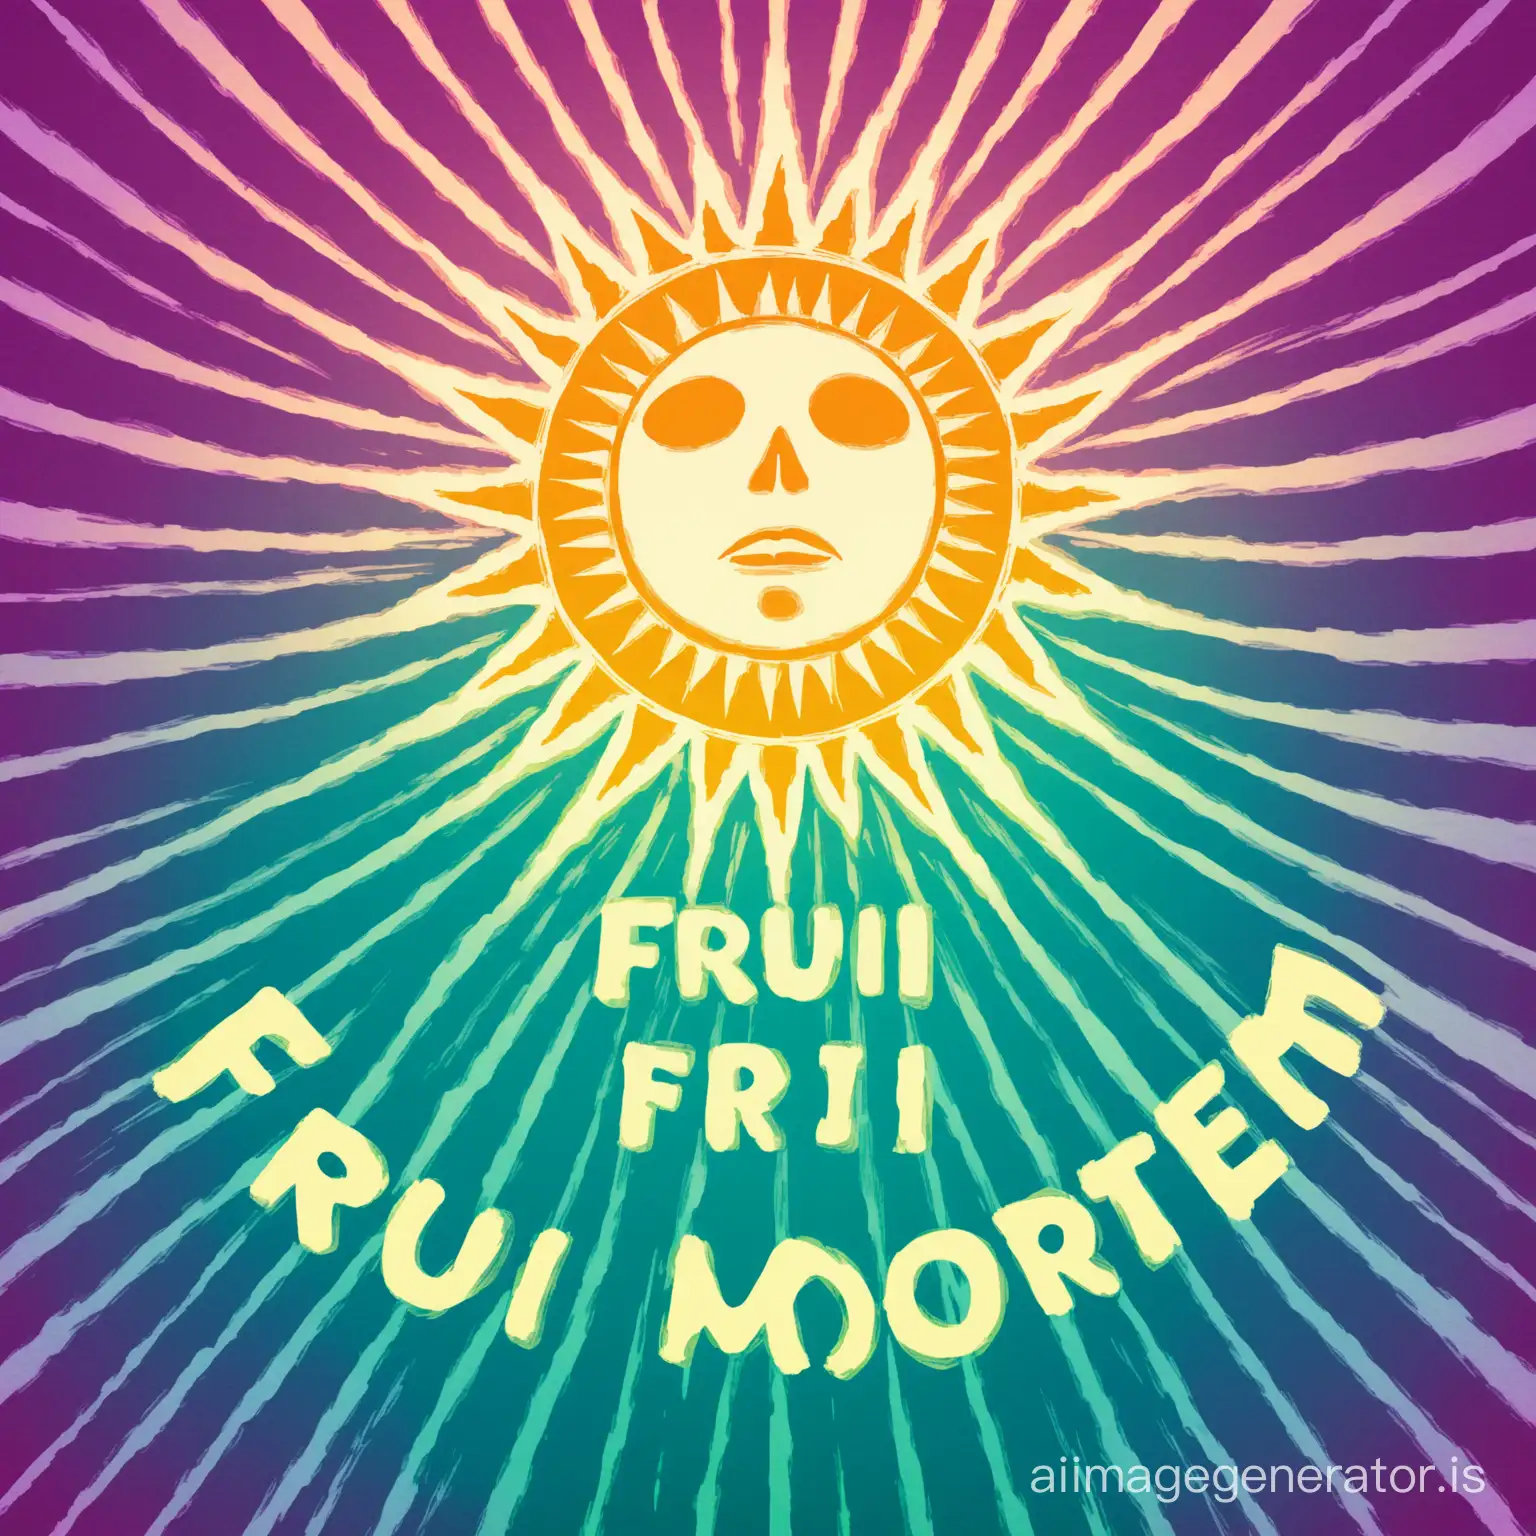 latin inspired sun, cool tones, text saying frui mortem